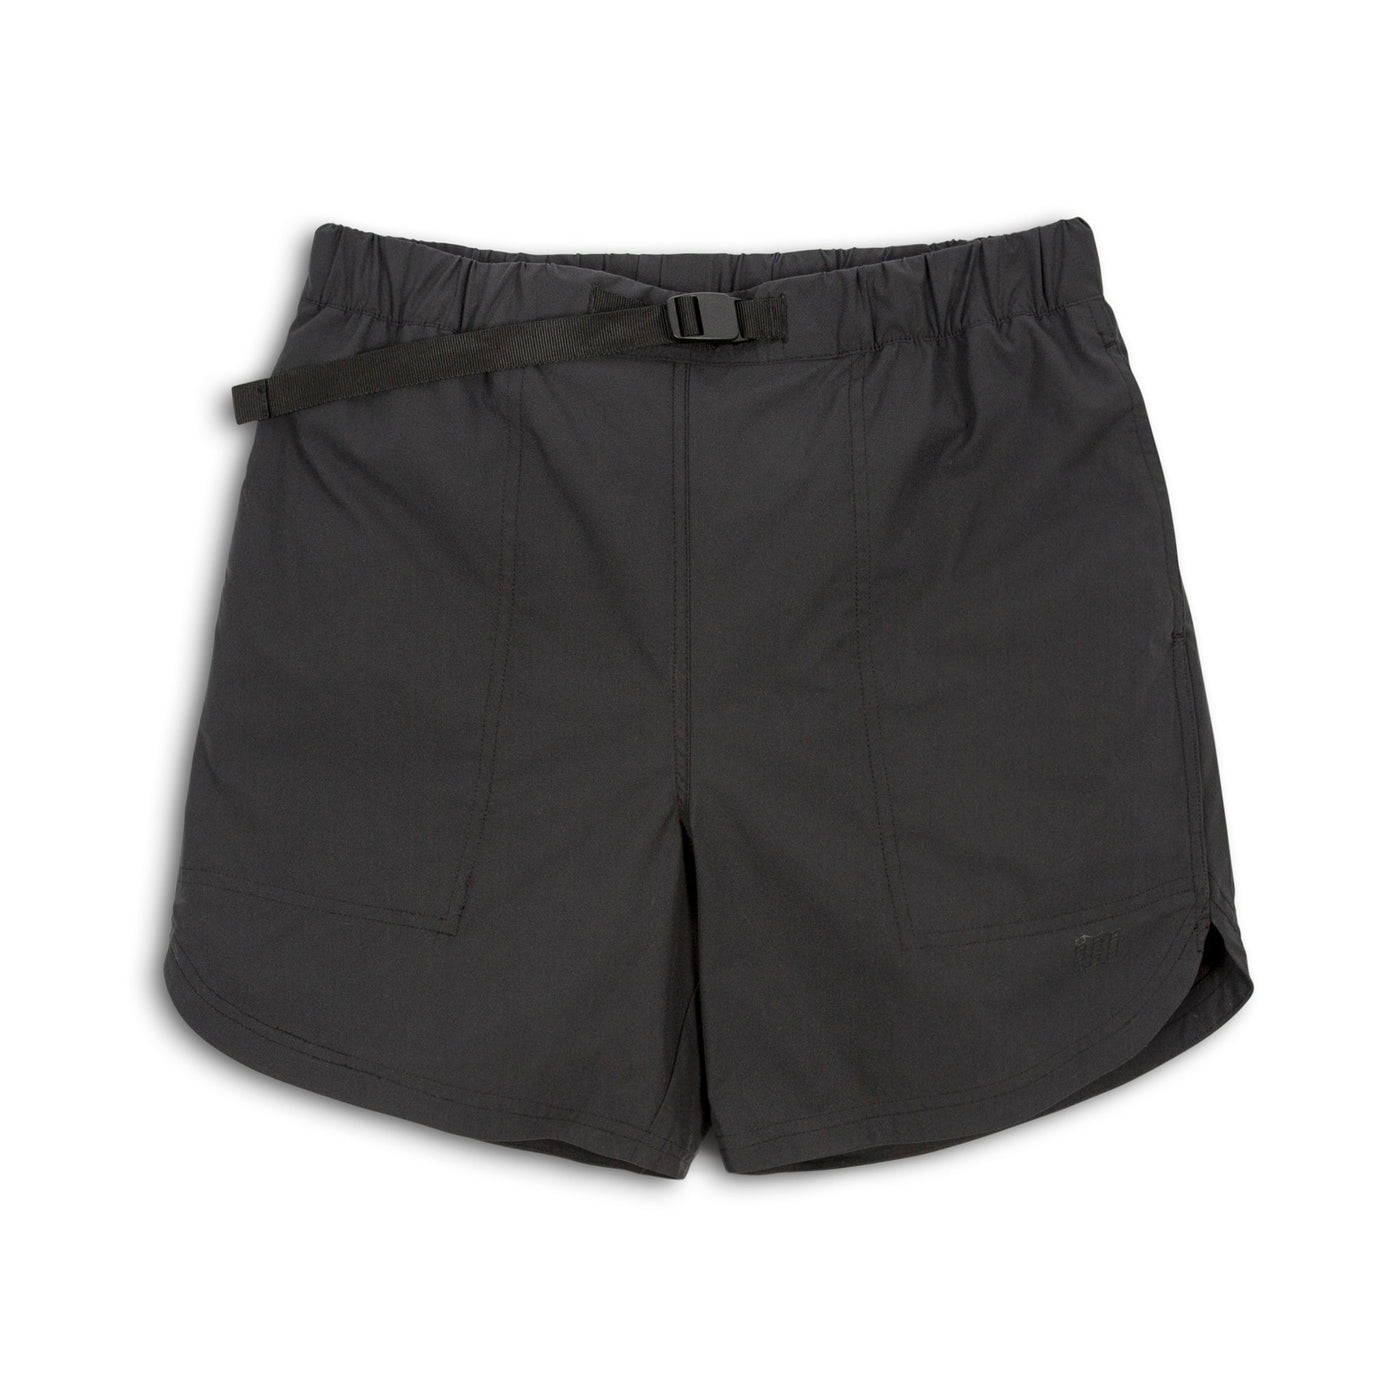 Topo Designs Men's River Shorts Lightweight quick dry swim trunks in "Black".